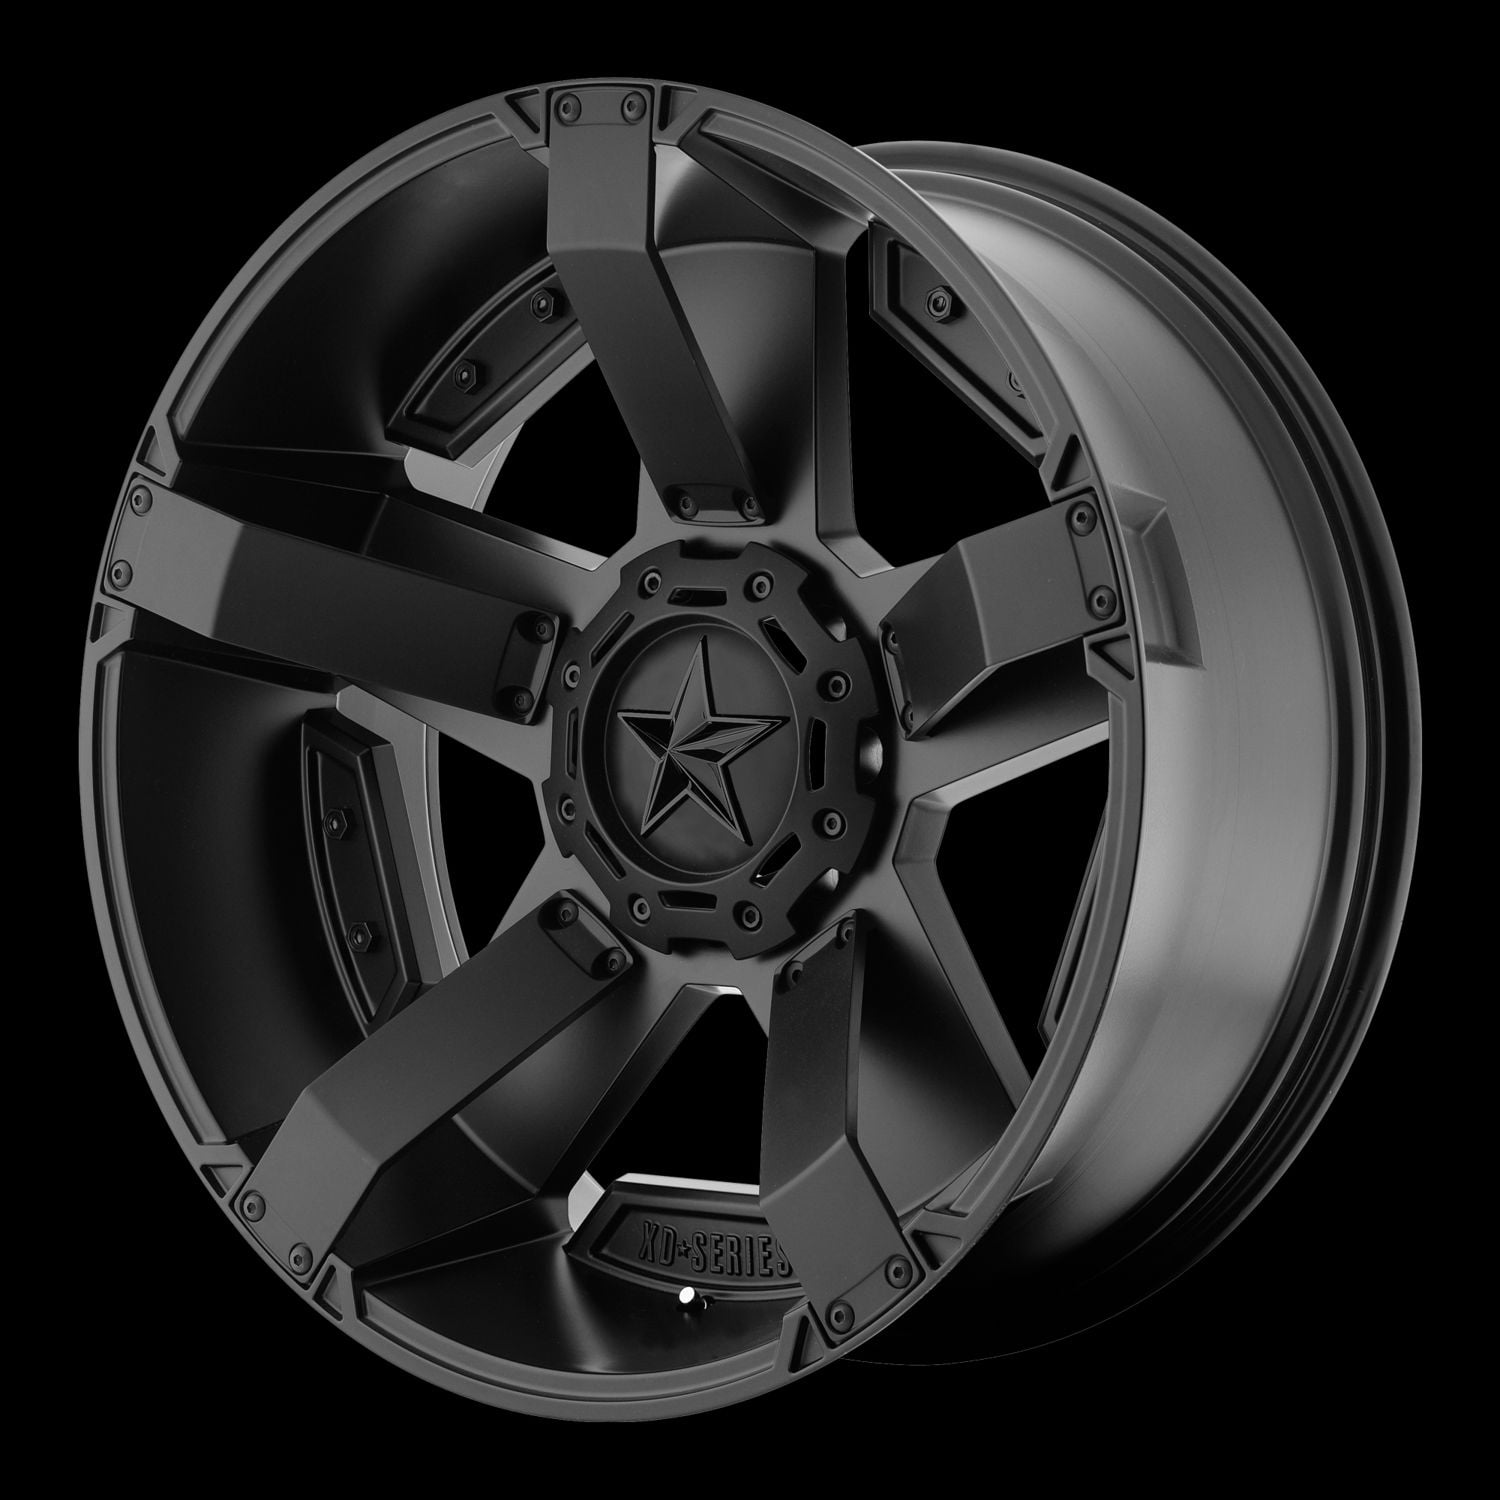 20 inch kmc rockstar wheels